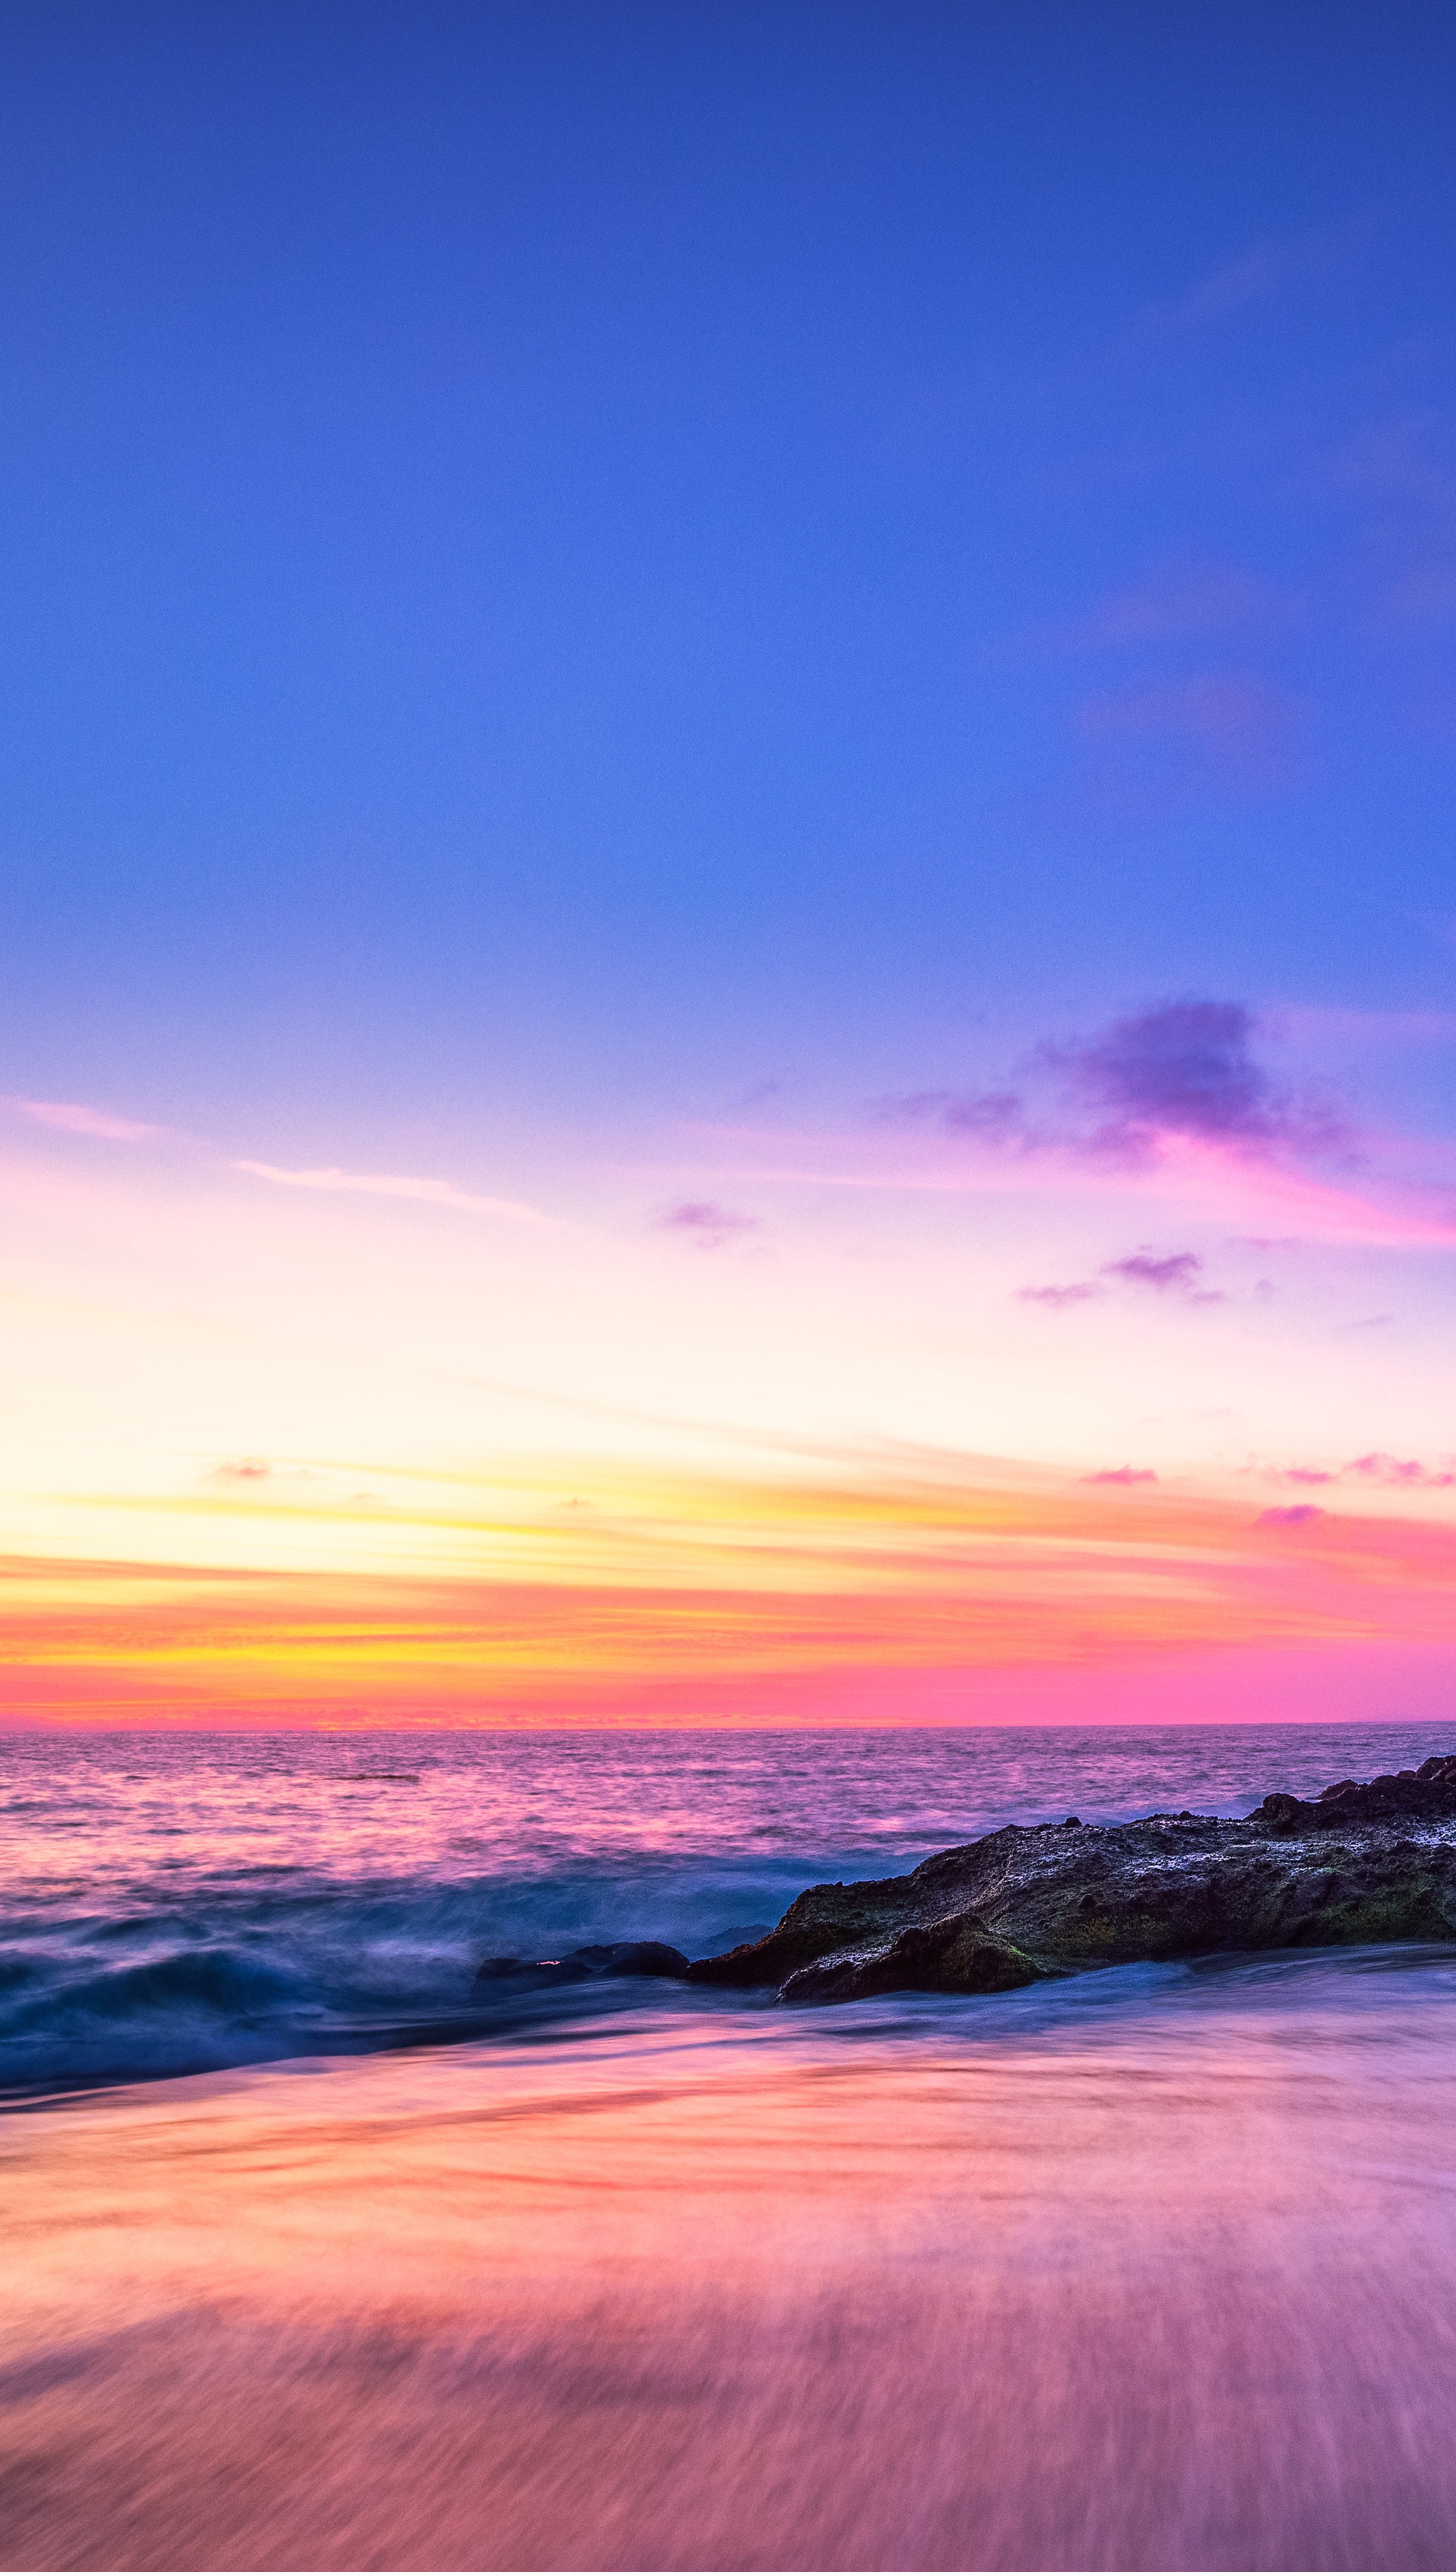 Laguna Beach at sunset Wallpapers ID:6595